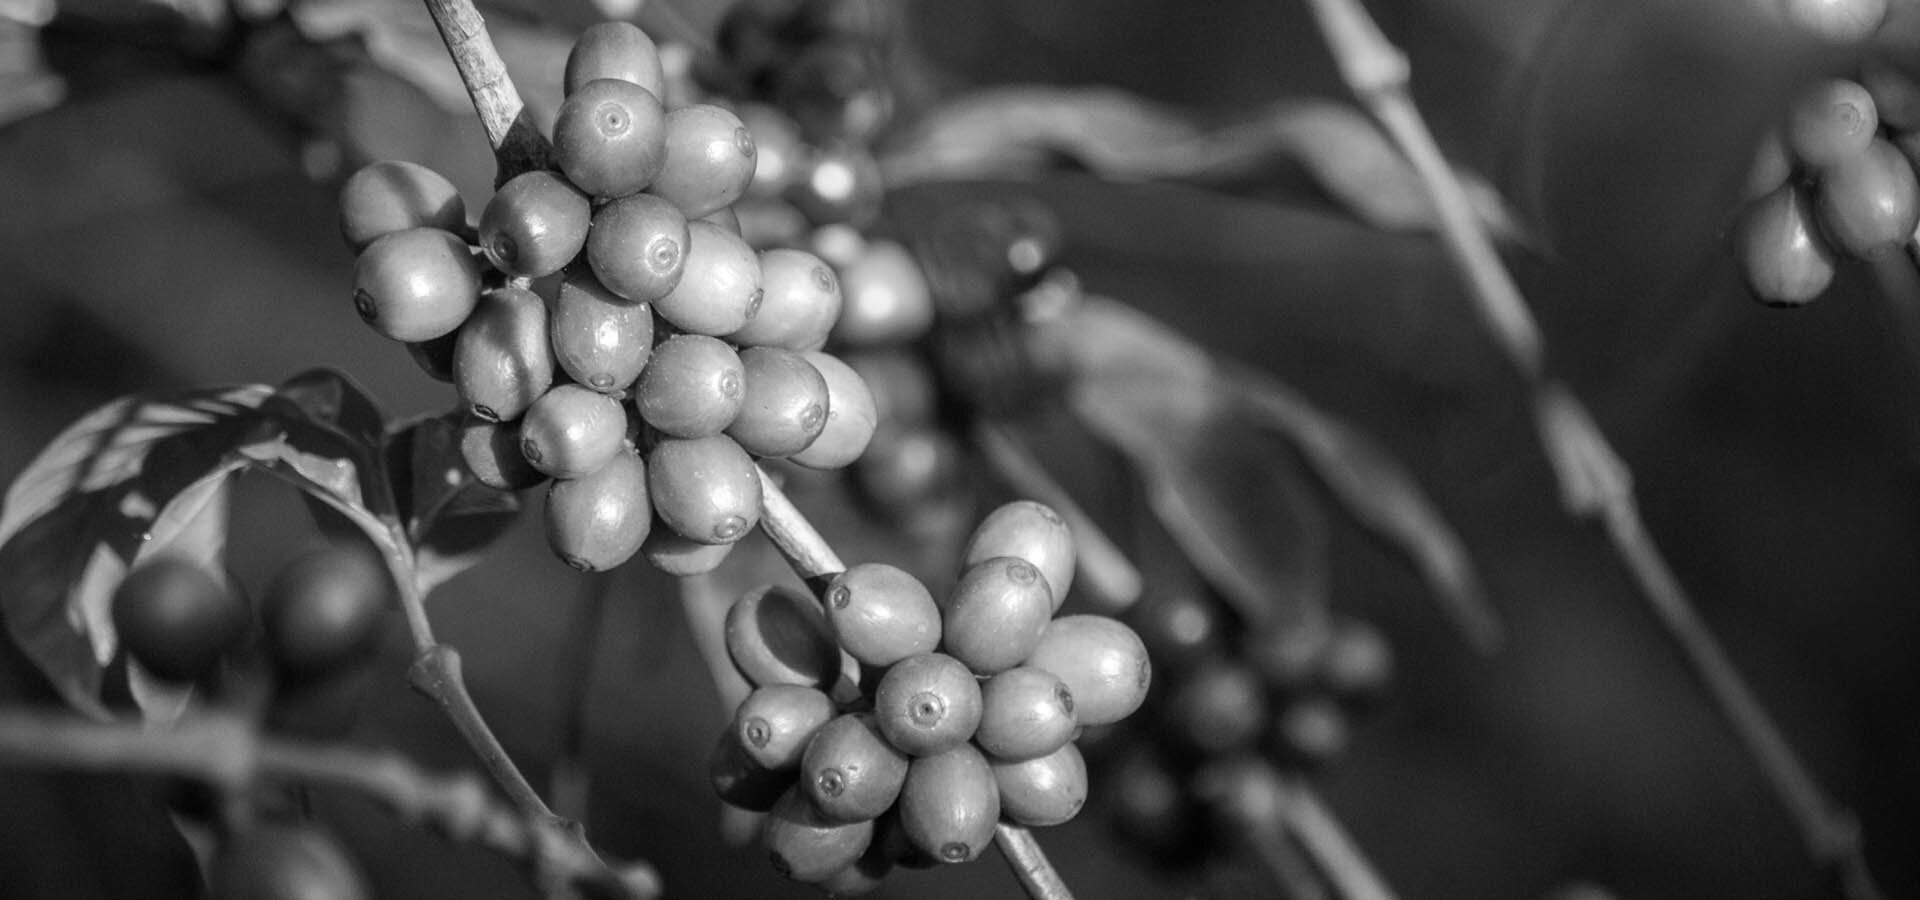 Coffee cherries ripening on the tree